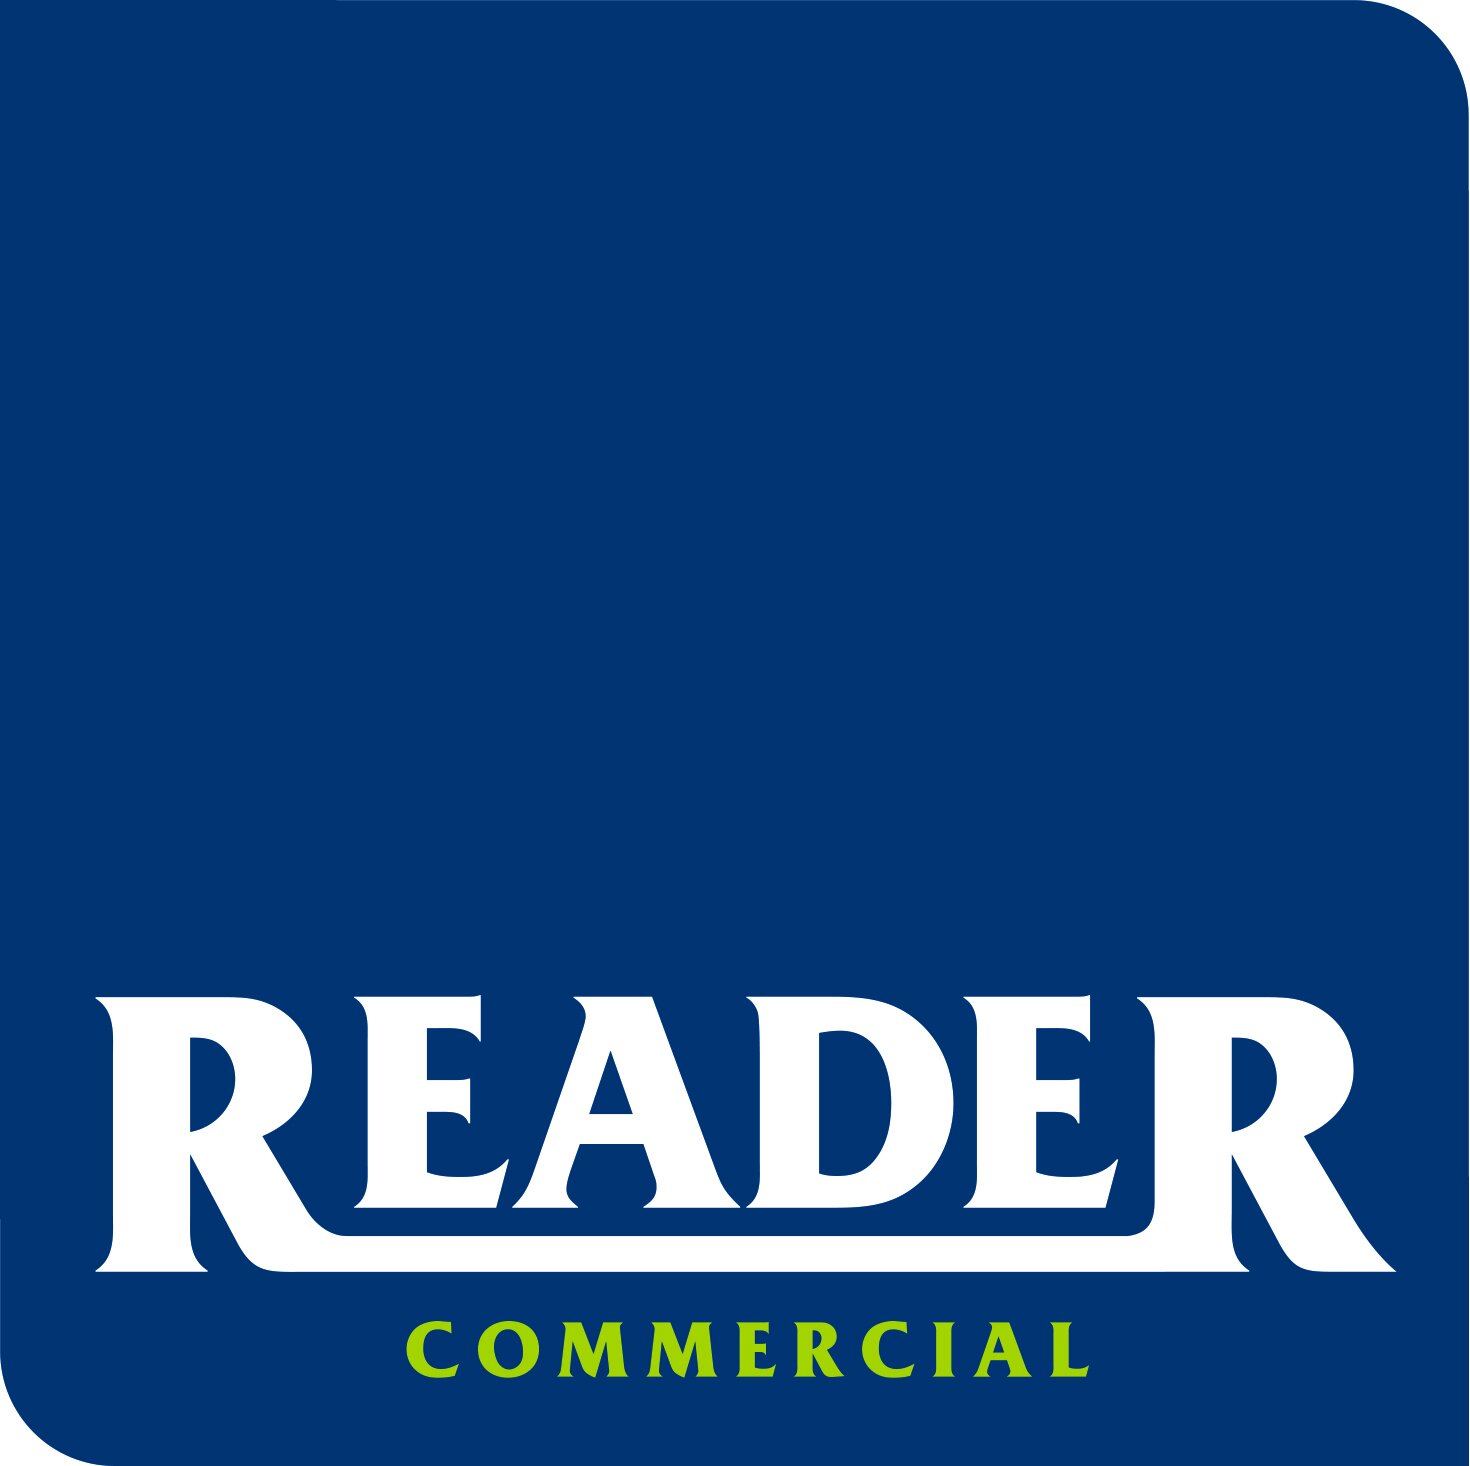 Reader Commercial logo (1).jpg